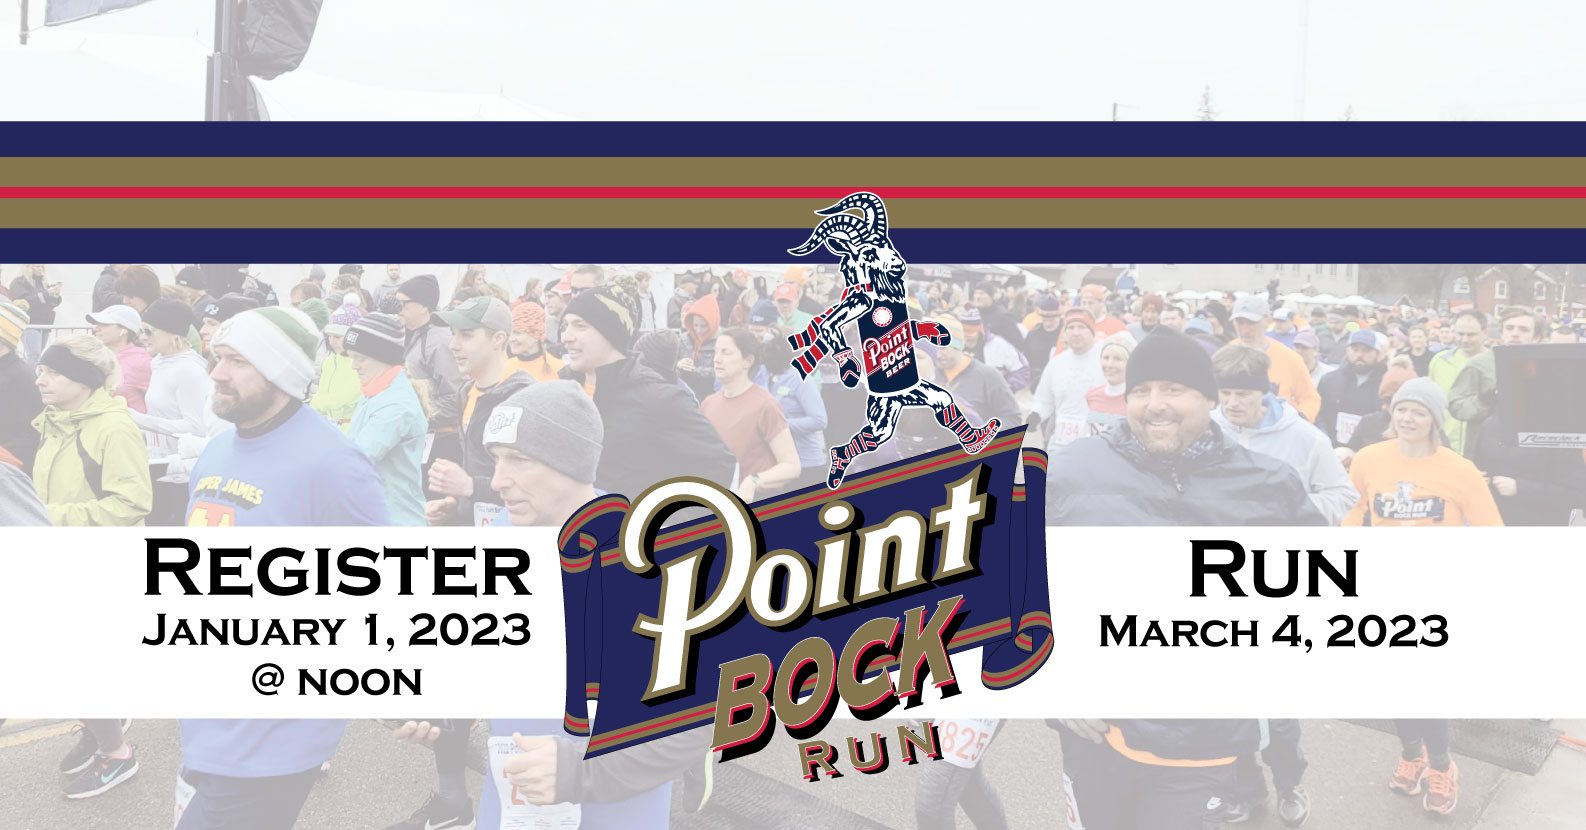 Event - 2023 Point Bock Run